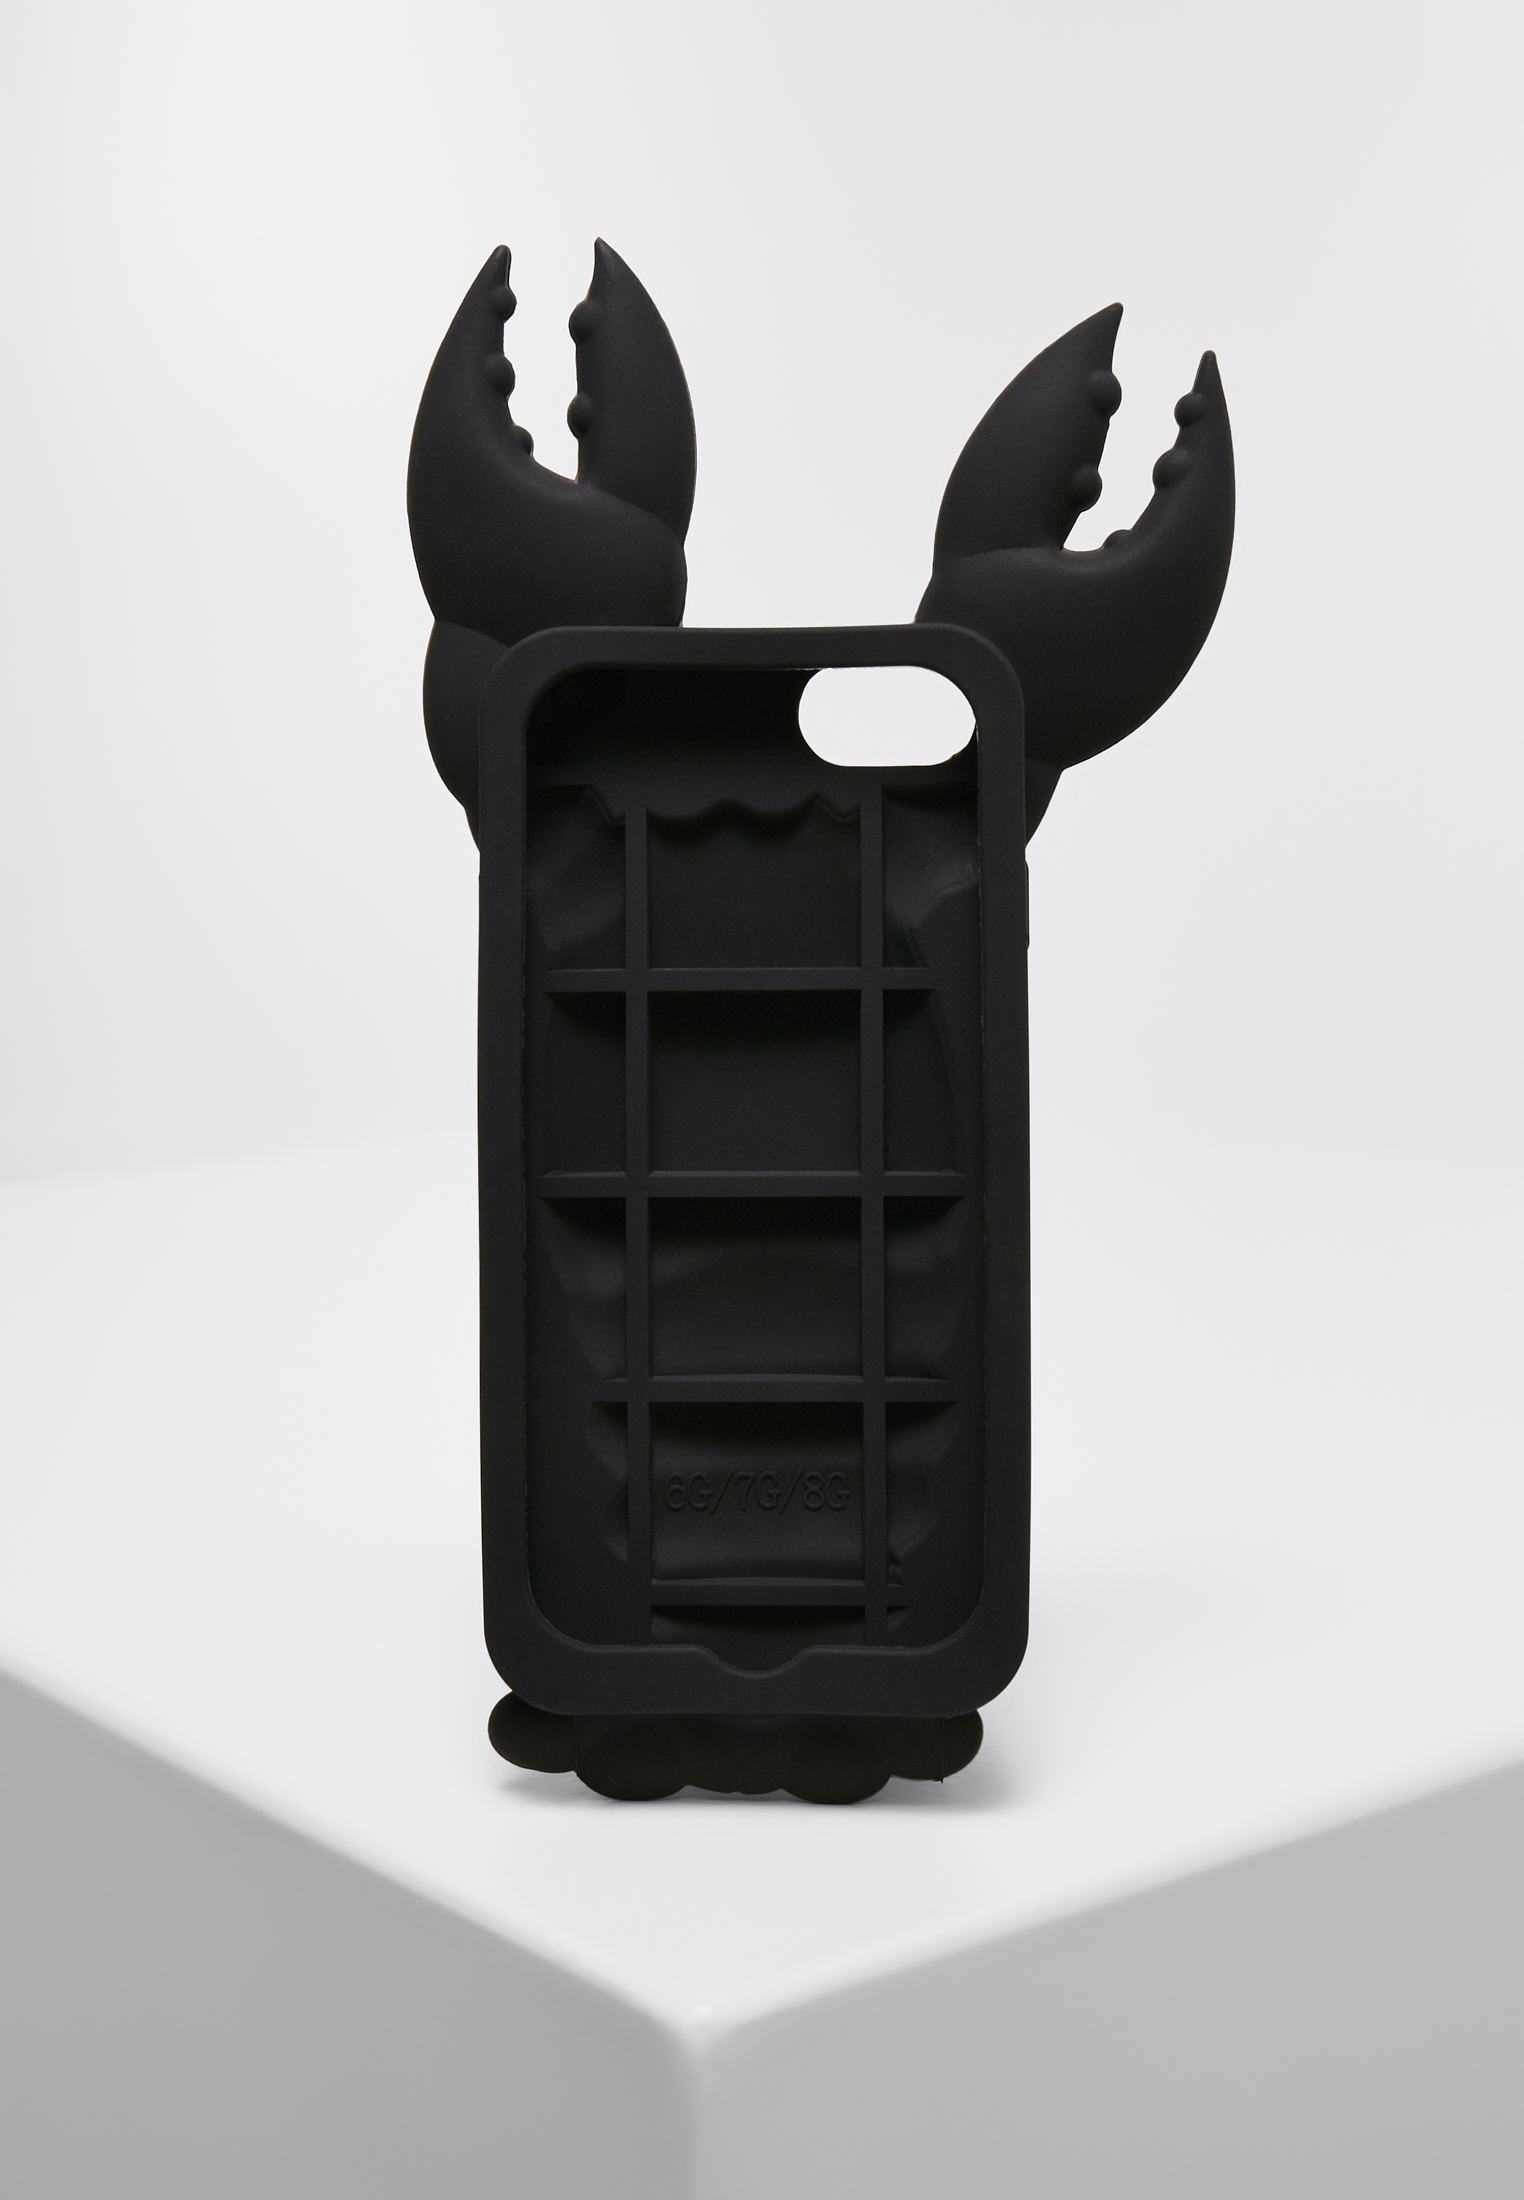 Phonecase Lobster iPhone 7/8, SE-MT2064